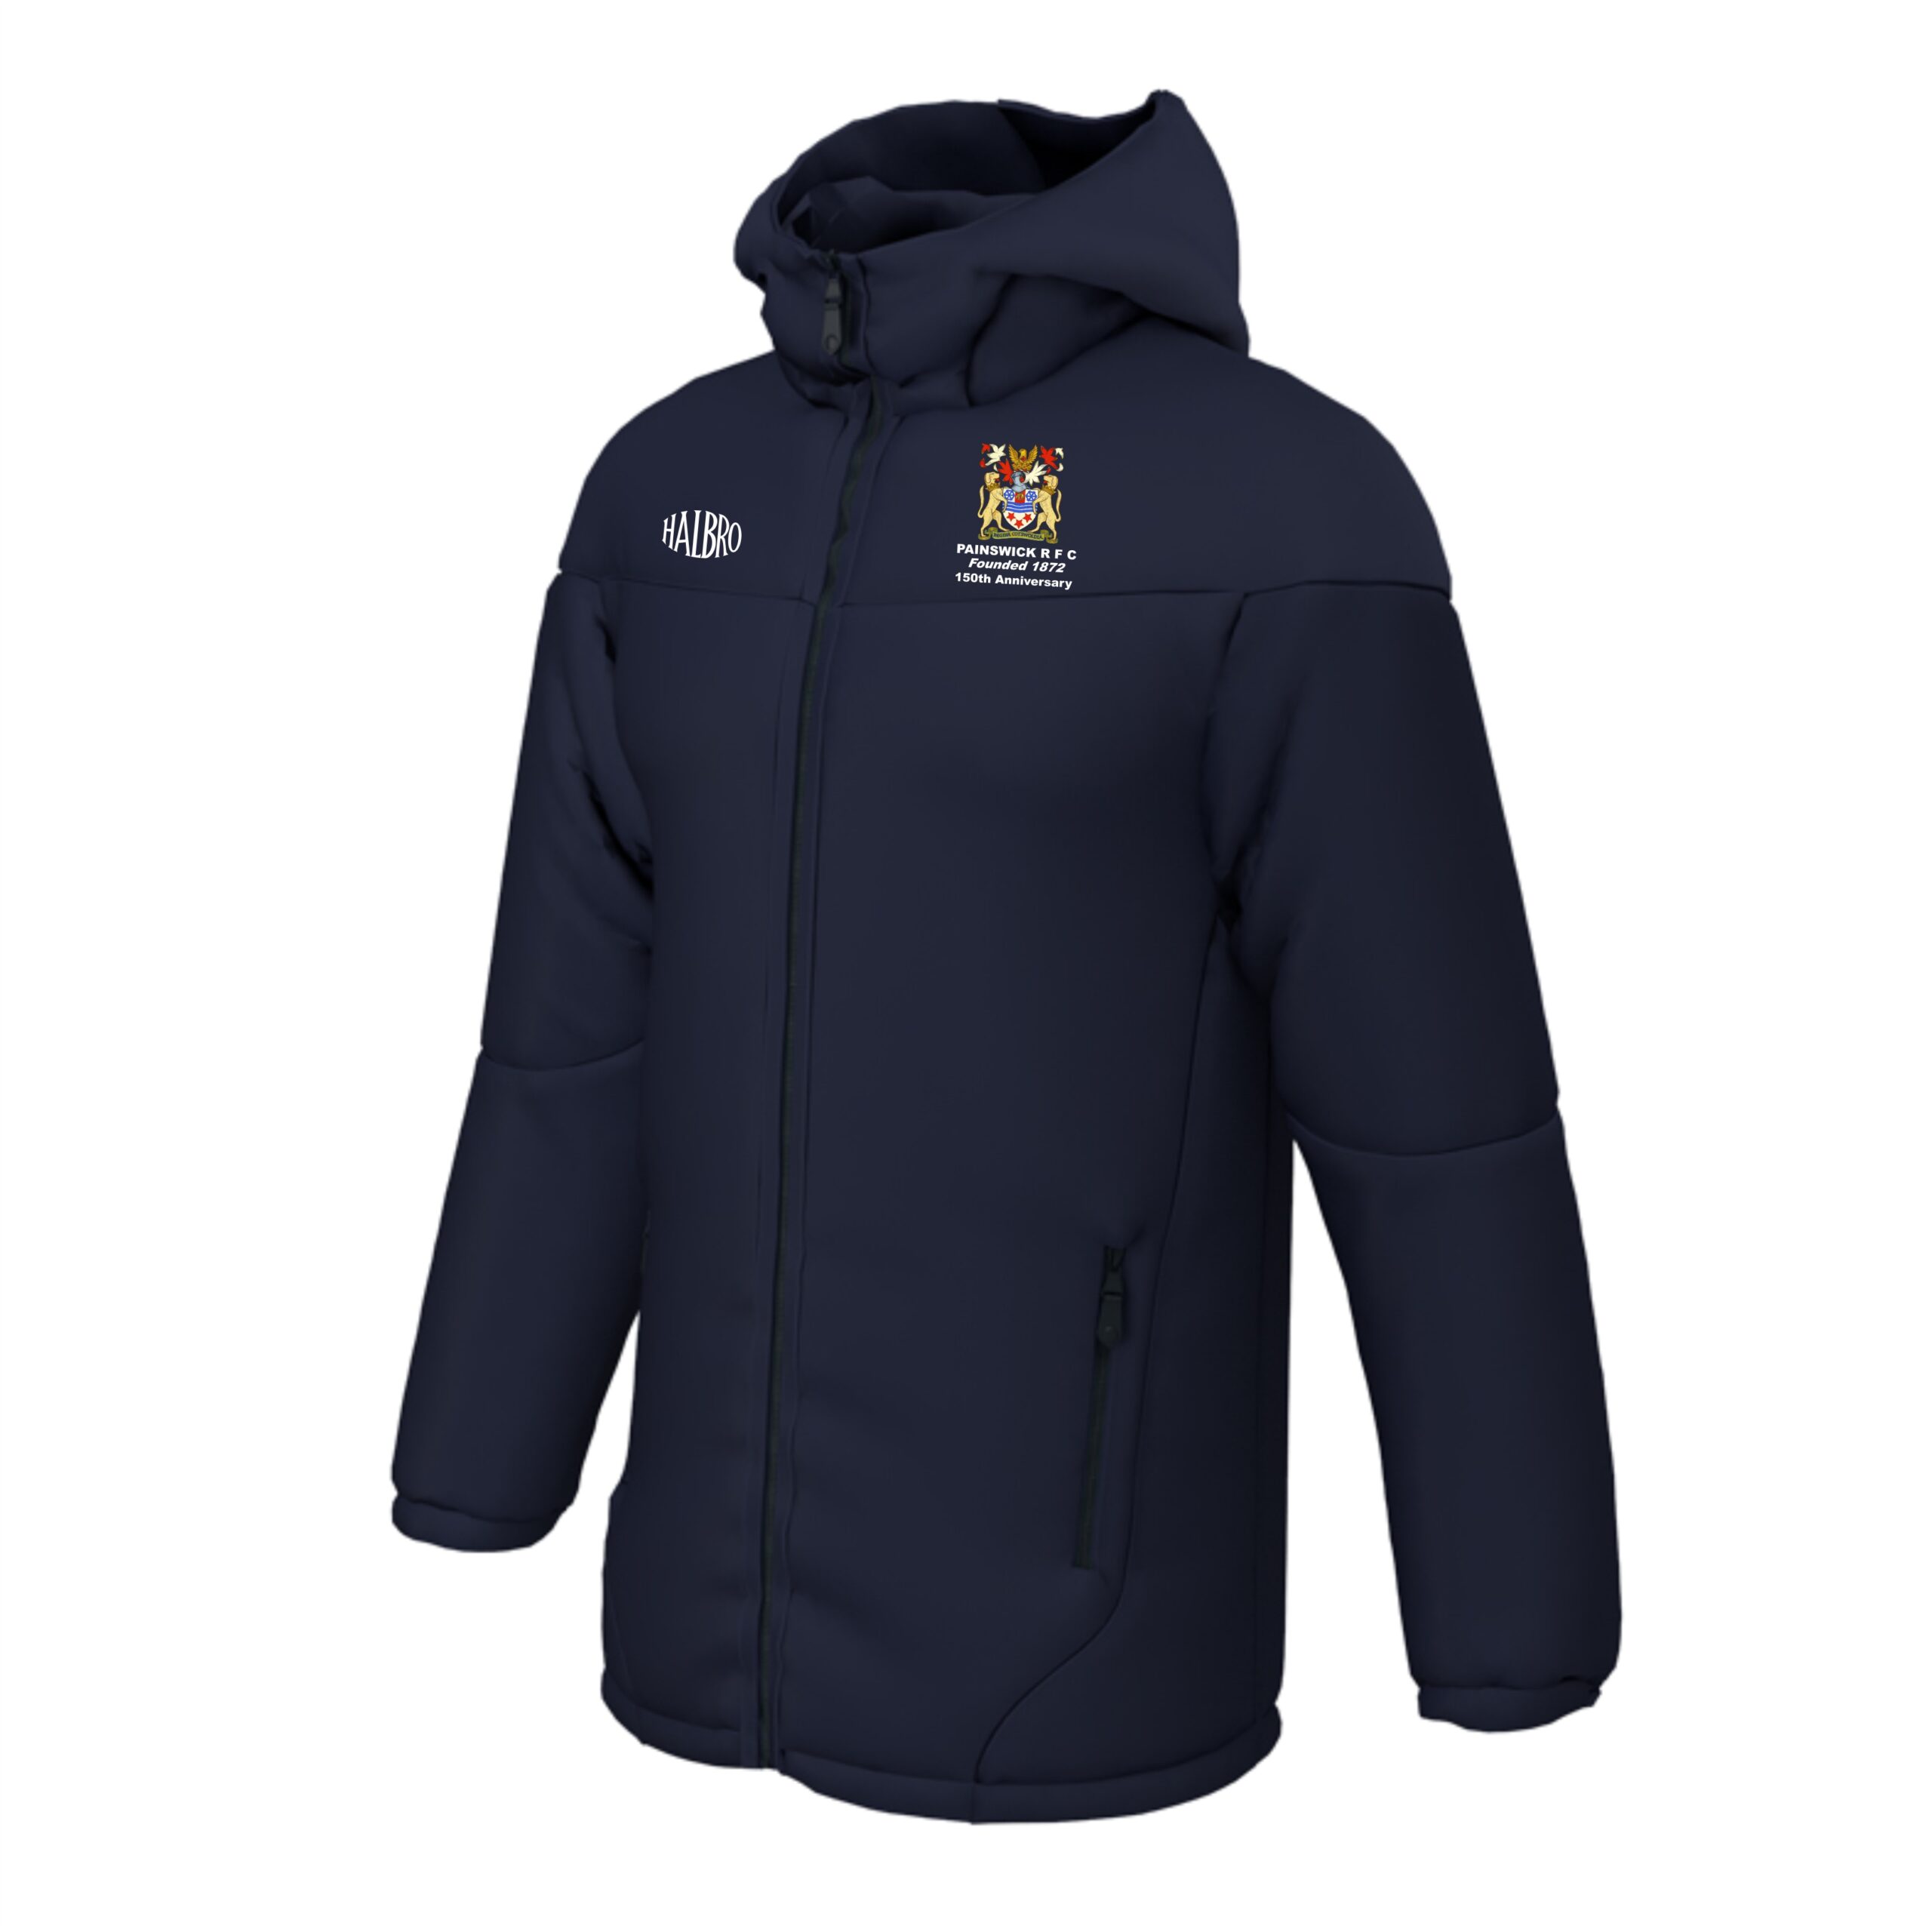 Painswick RFC Seniors Cratus 3/4 Padded Jacket - Halbro Sportswear Limited